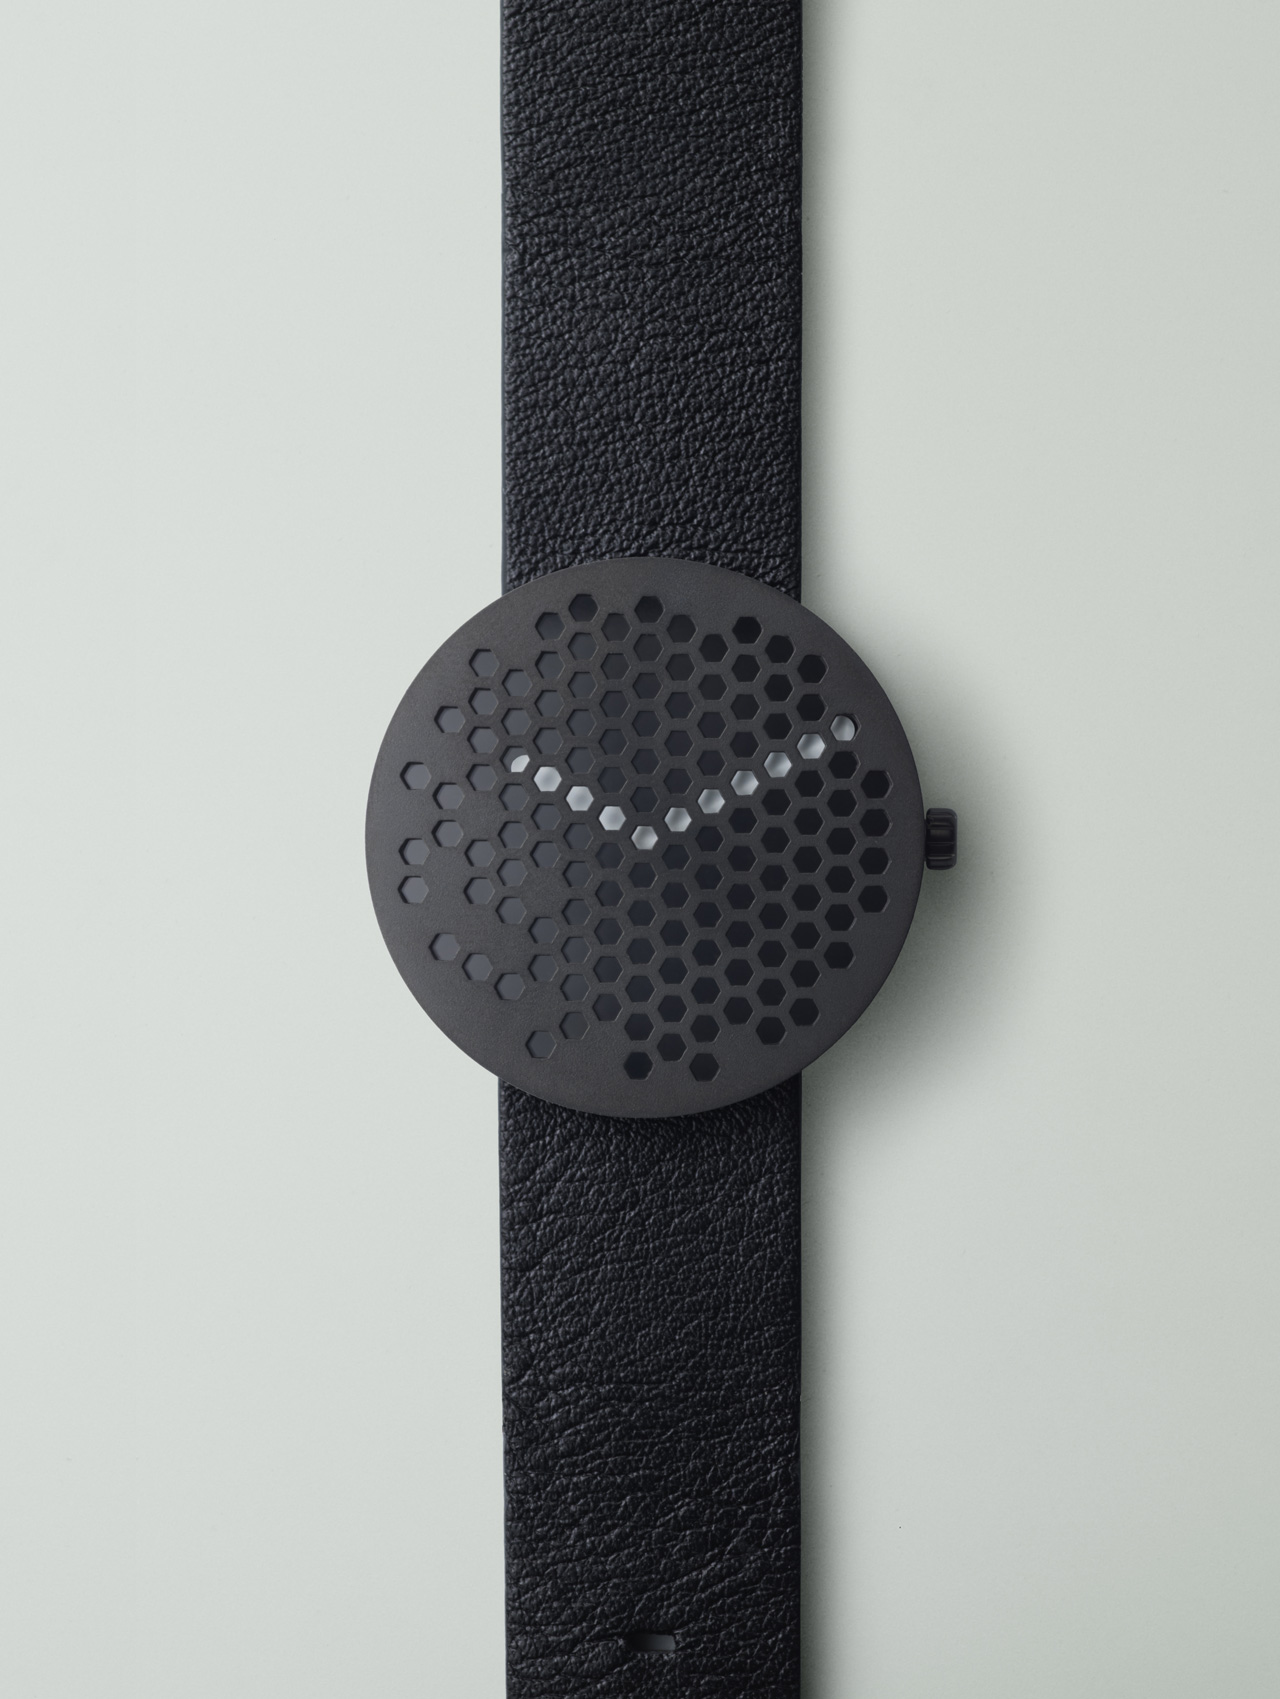 Alexander Lervik's Bikupa watch, created for his own design brand Tingest.